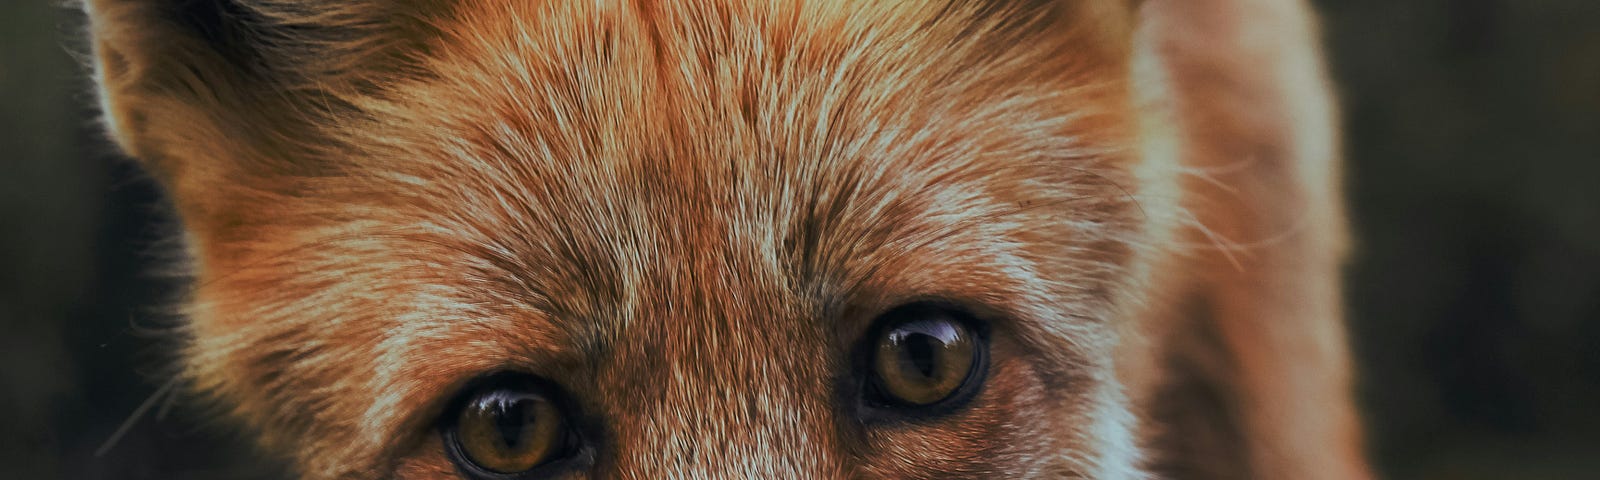 fox peering closely at screen